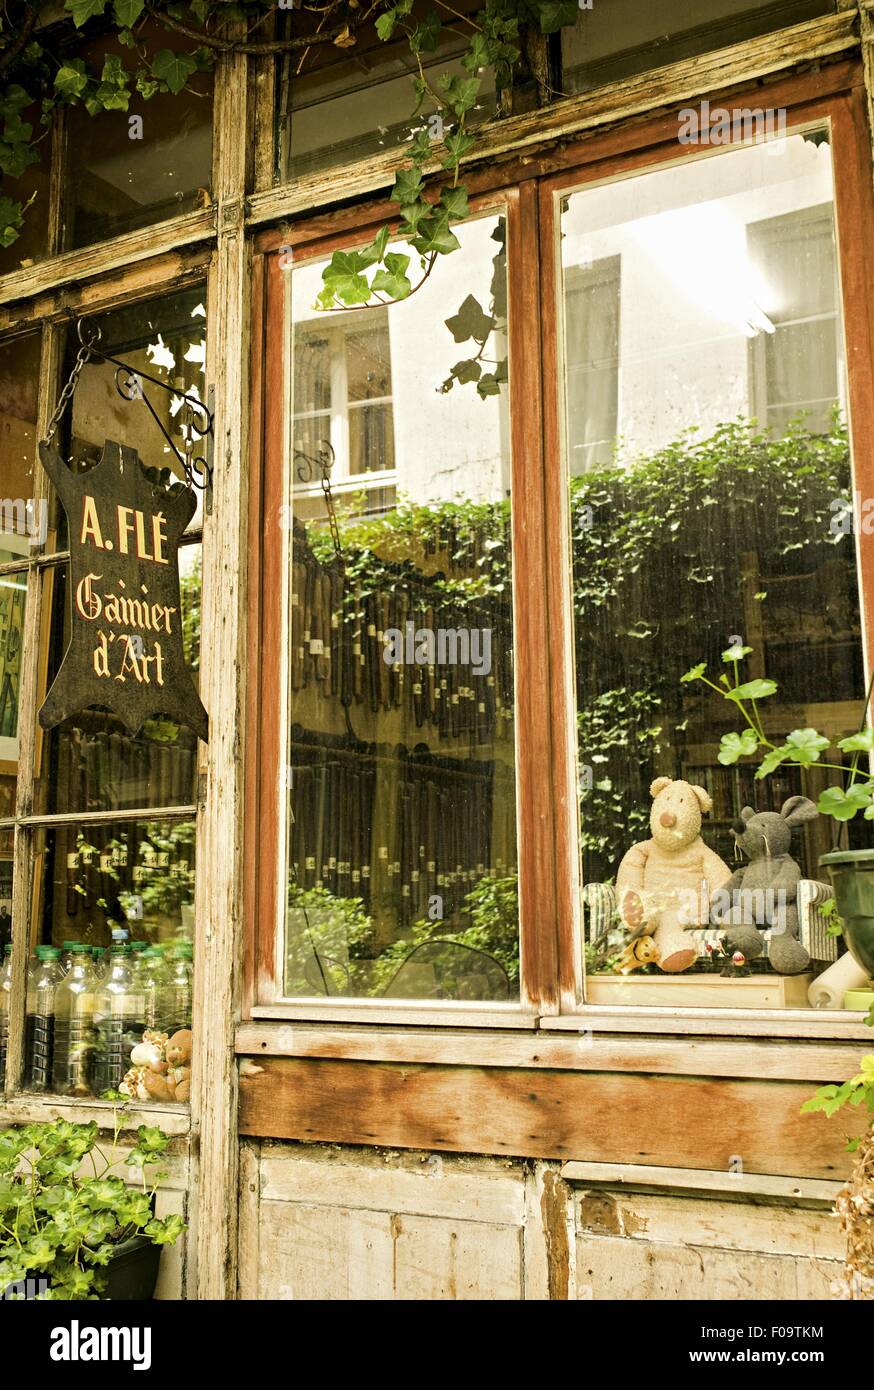 Lhomme Gainier d'Art window in Paris Stock Photo